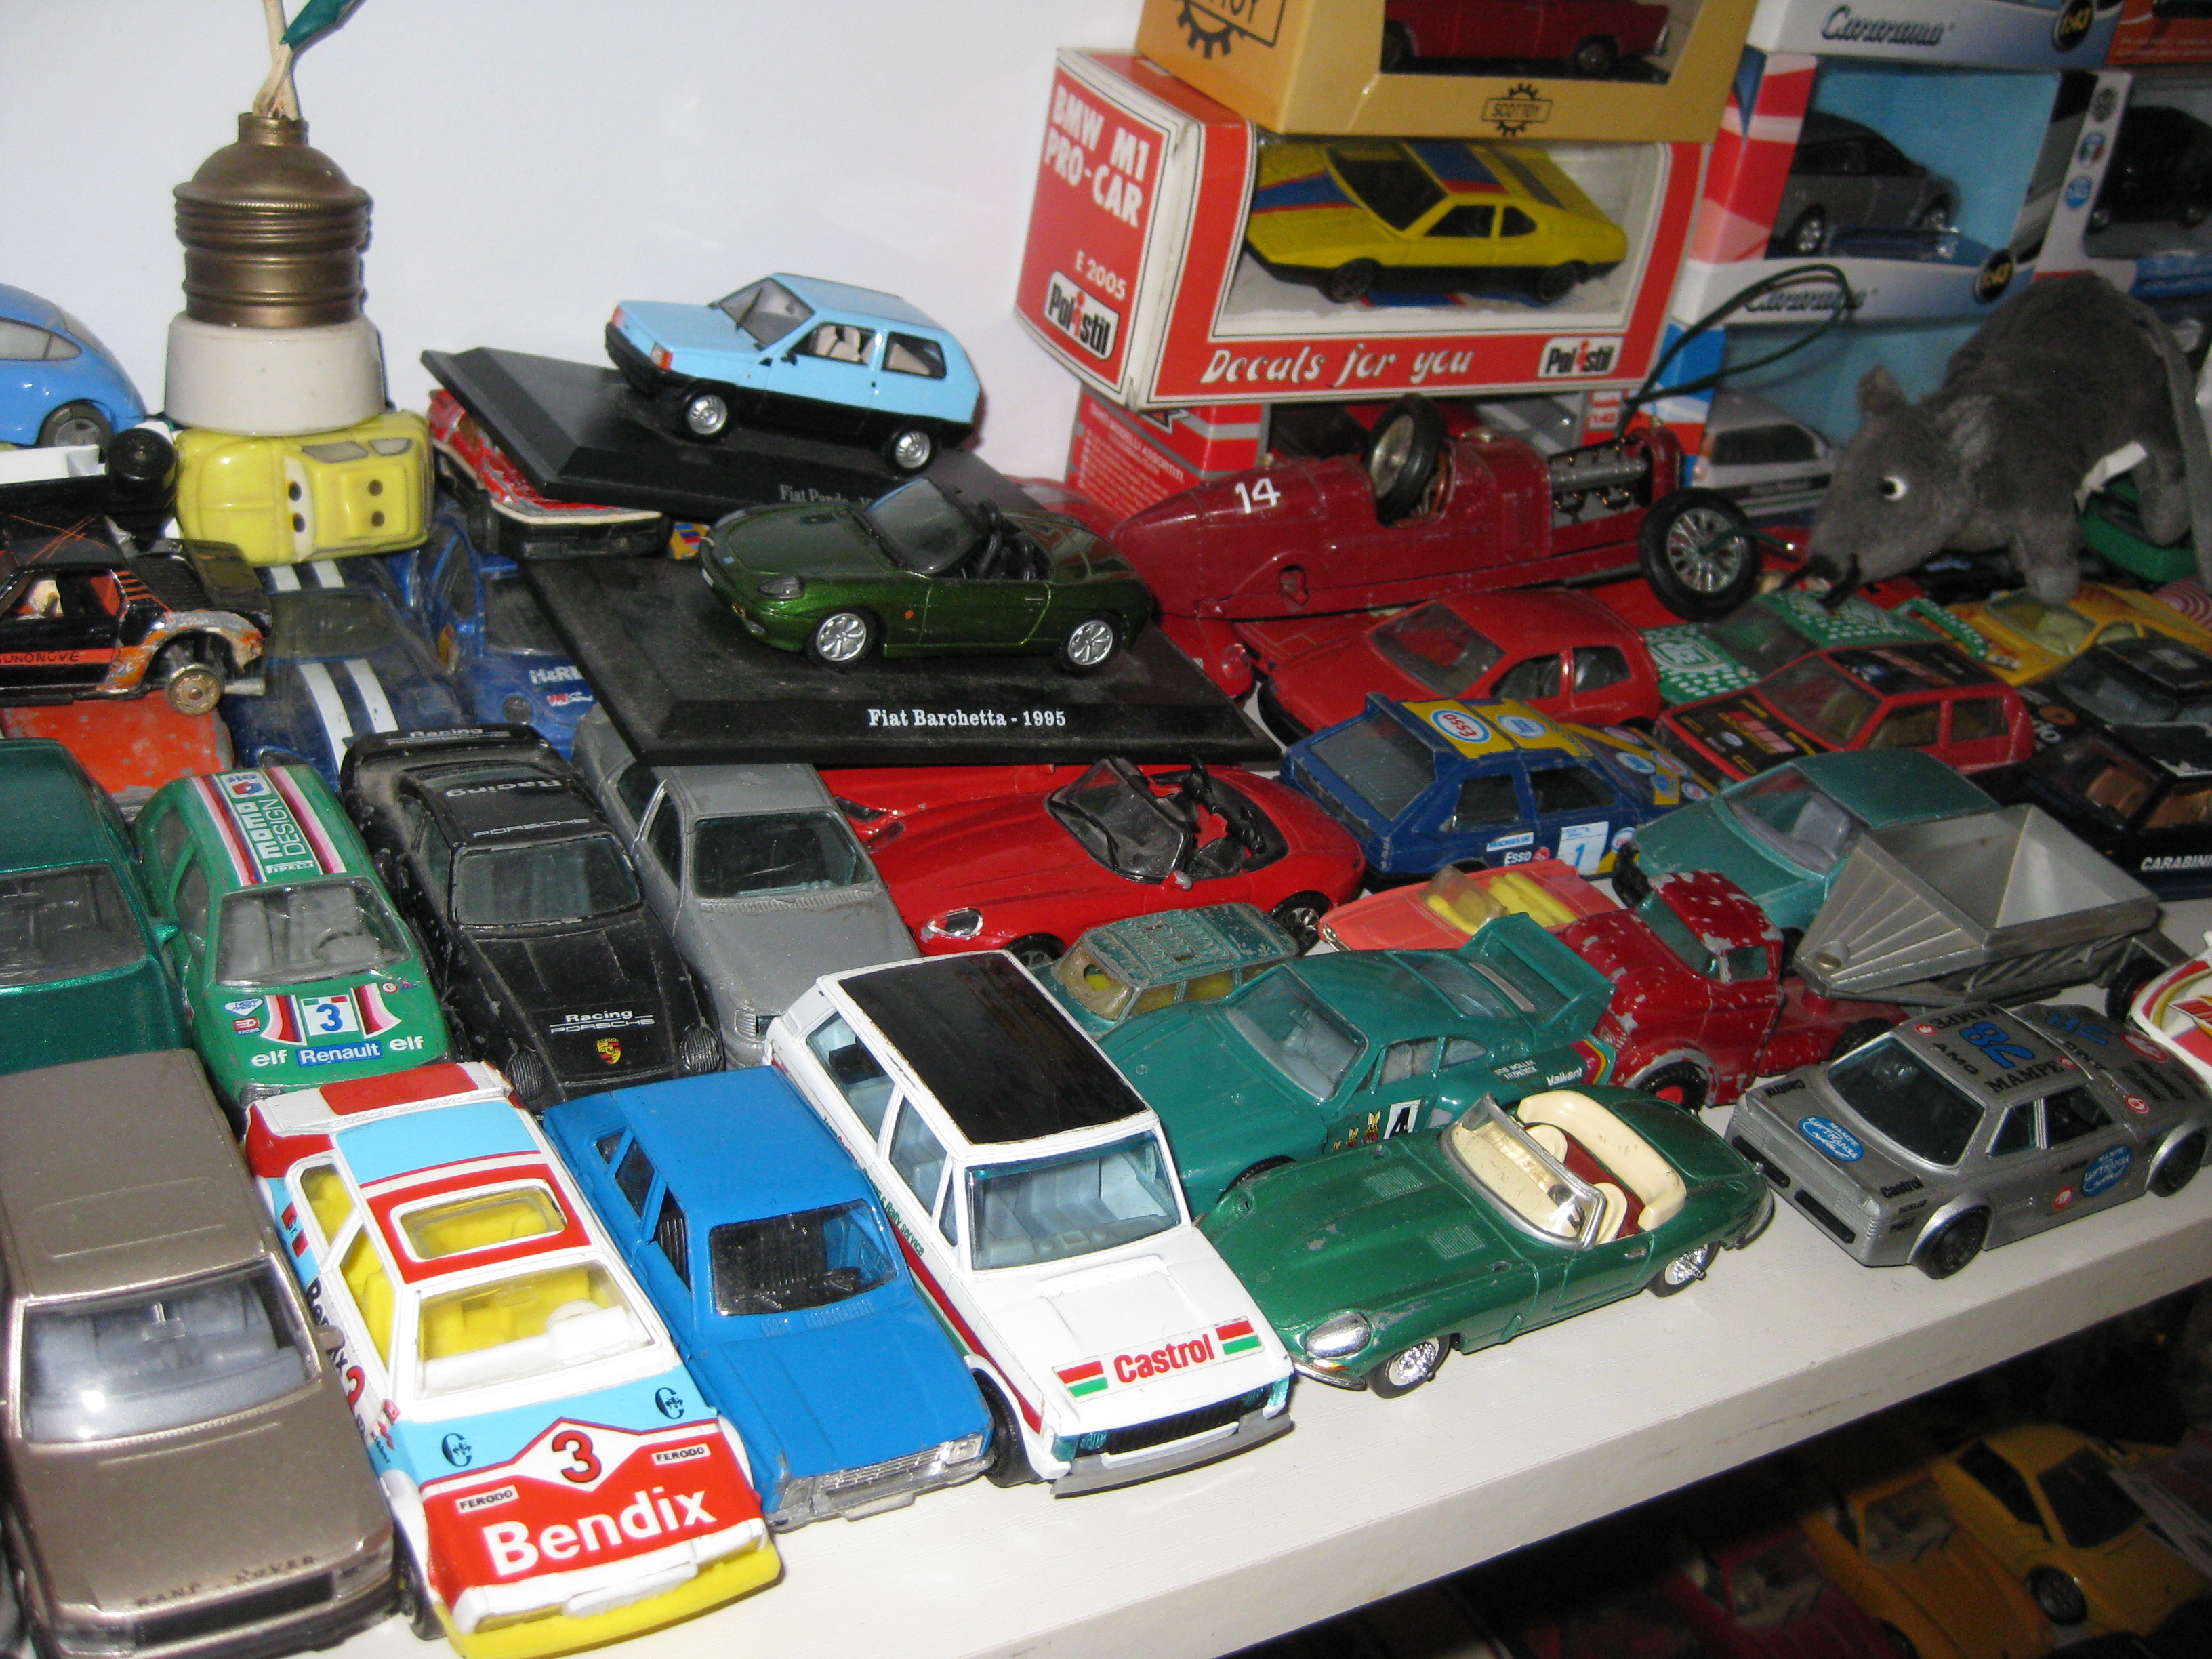 Le mini vetture del mini garage di Cars. W5eqE0pJ